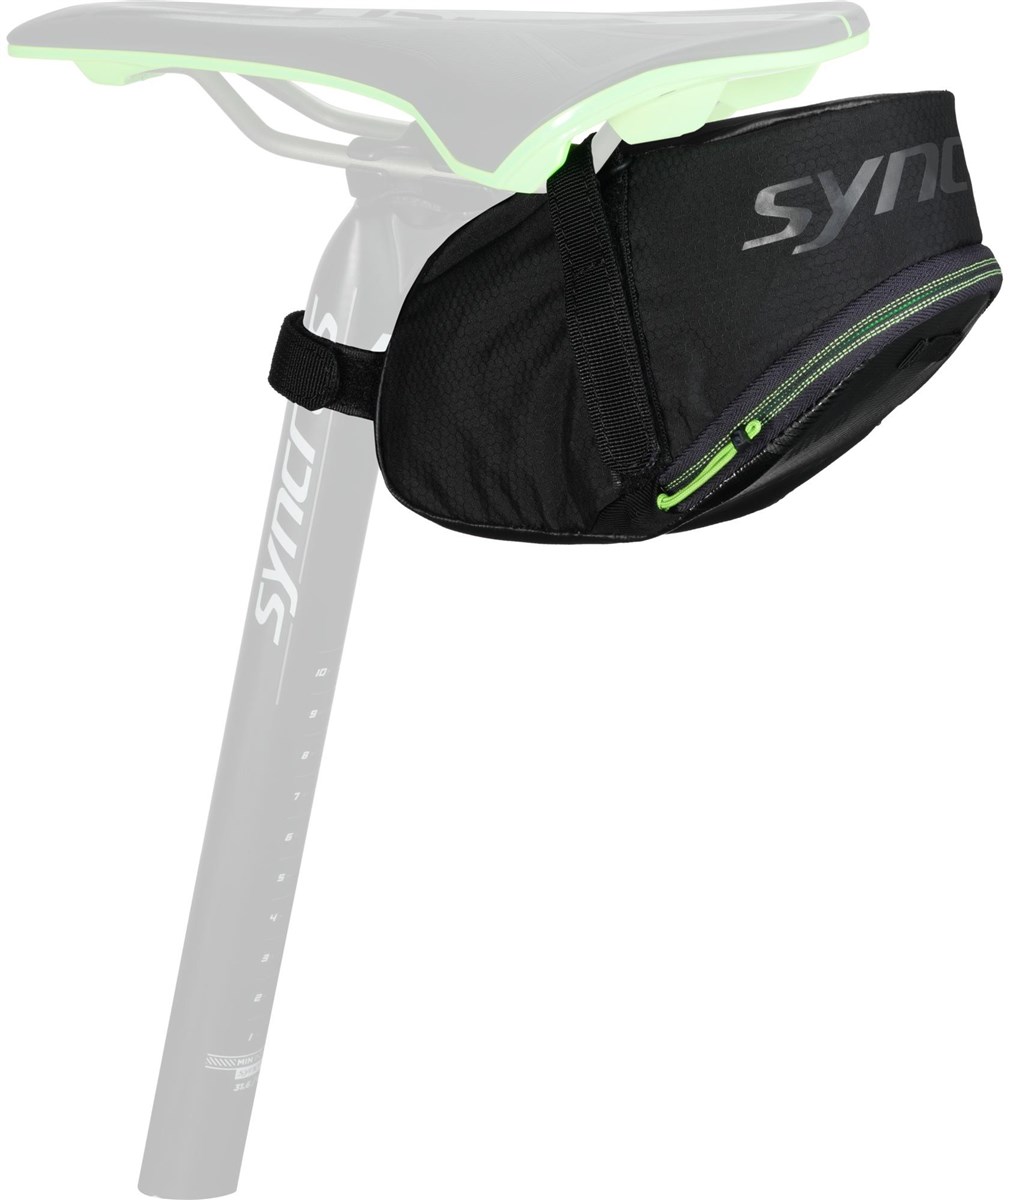 Syncros HiVol 750 Saddle Bag with Strap product image